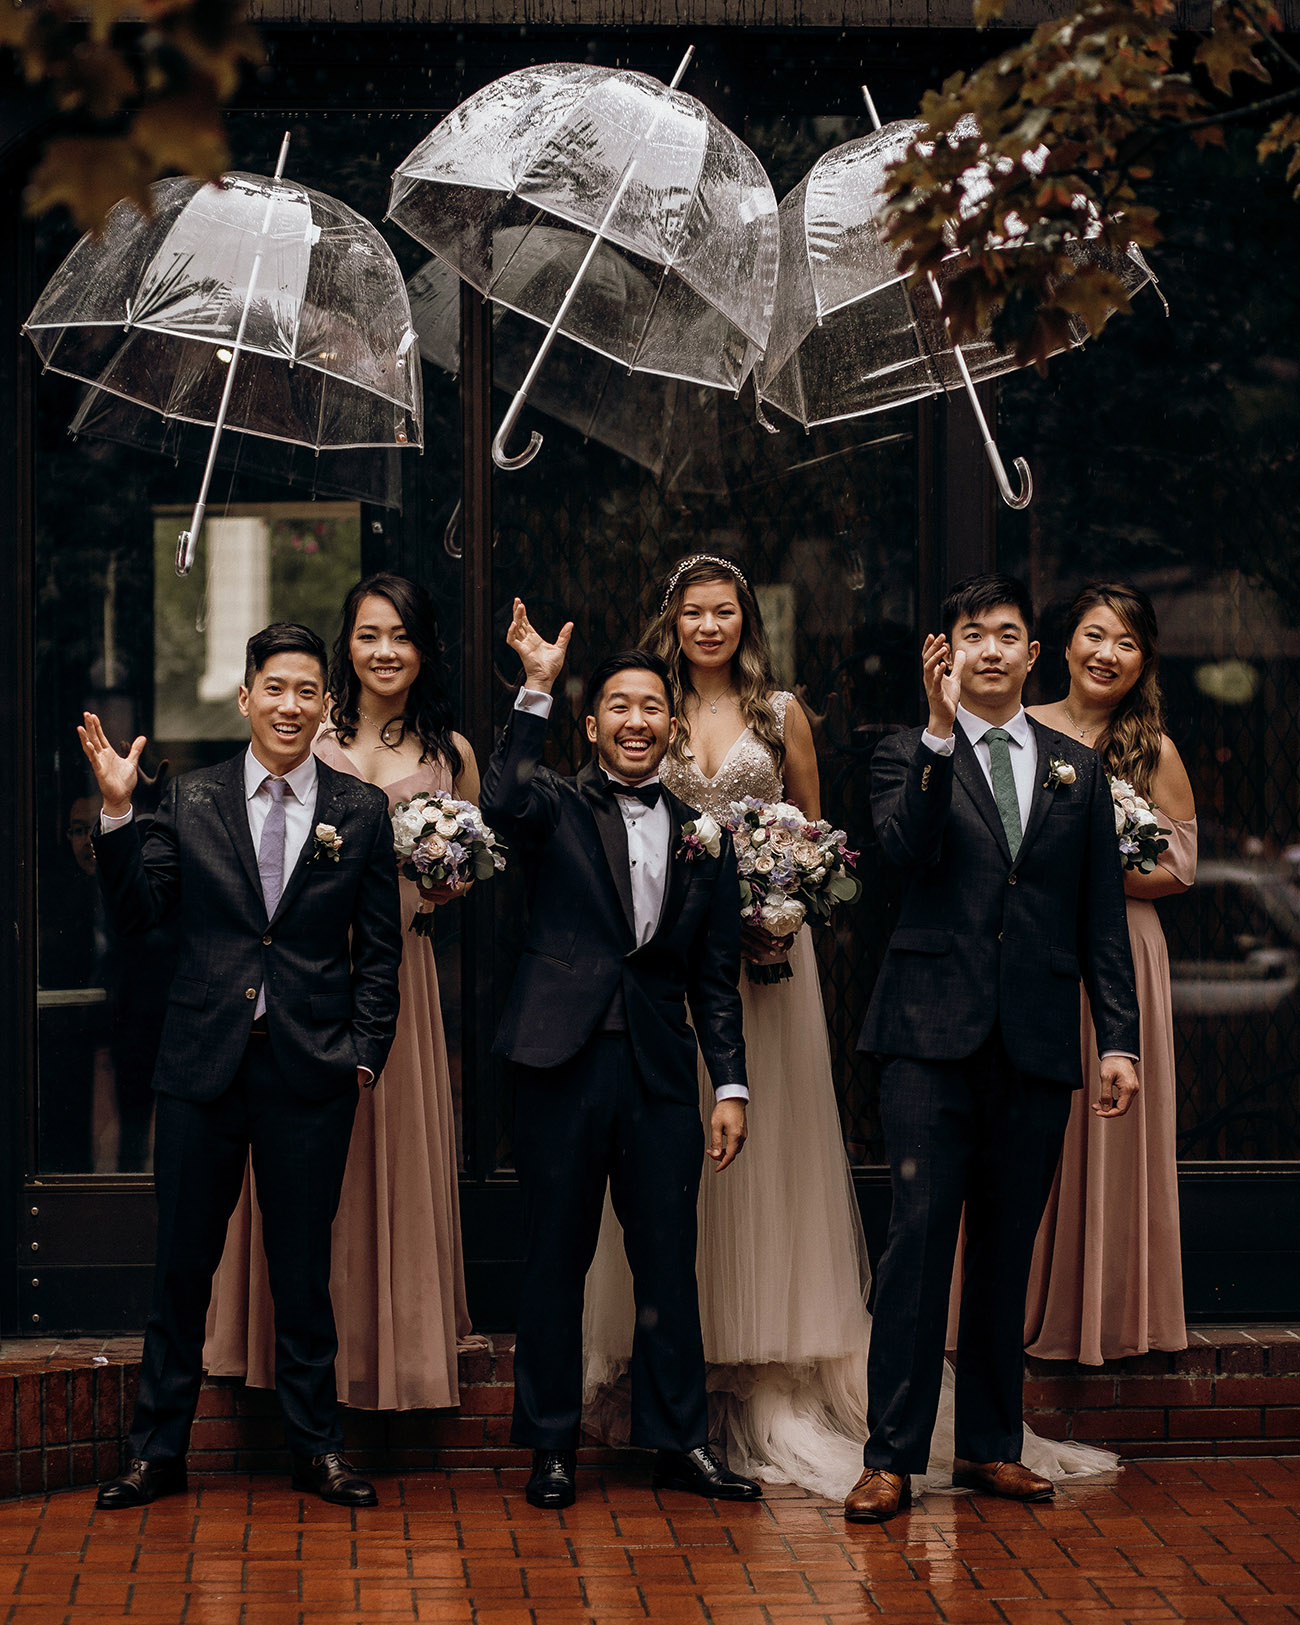 bridal party with umbrellas for rainy wedding